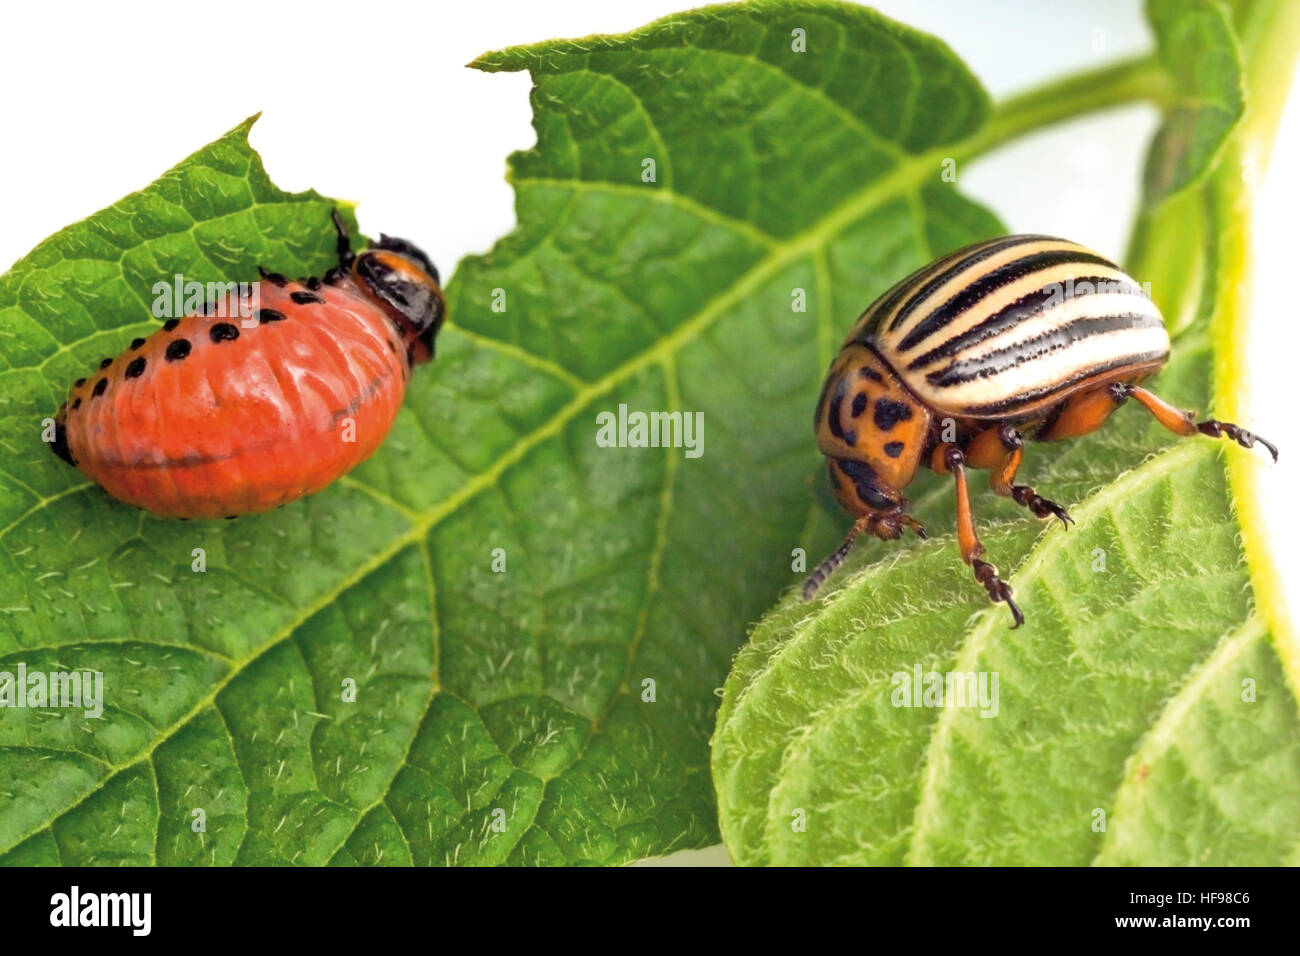 Potato Beetle and Potato Beetle larva (Leptinotarsa decemlineata) on a gnawed-on potato leaf Stock Photo